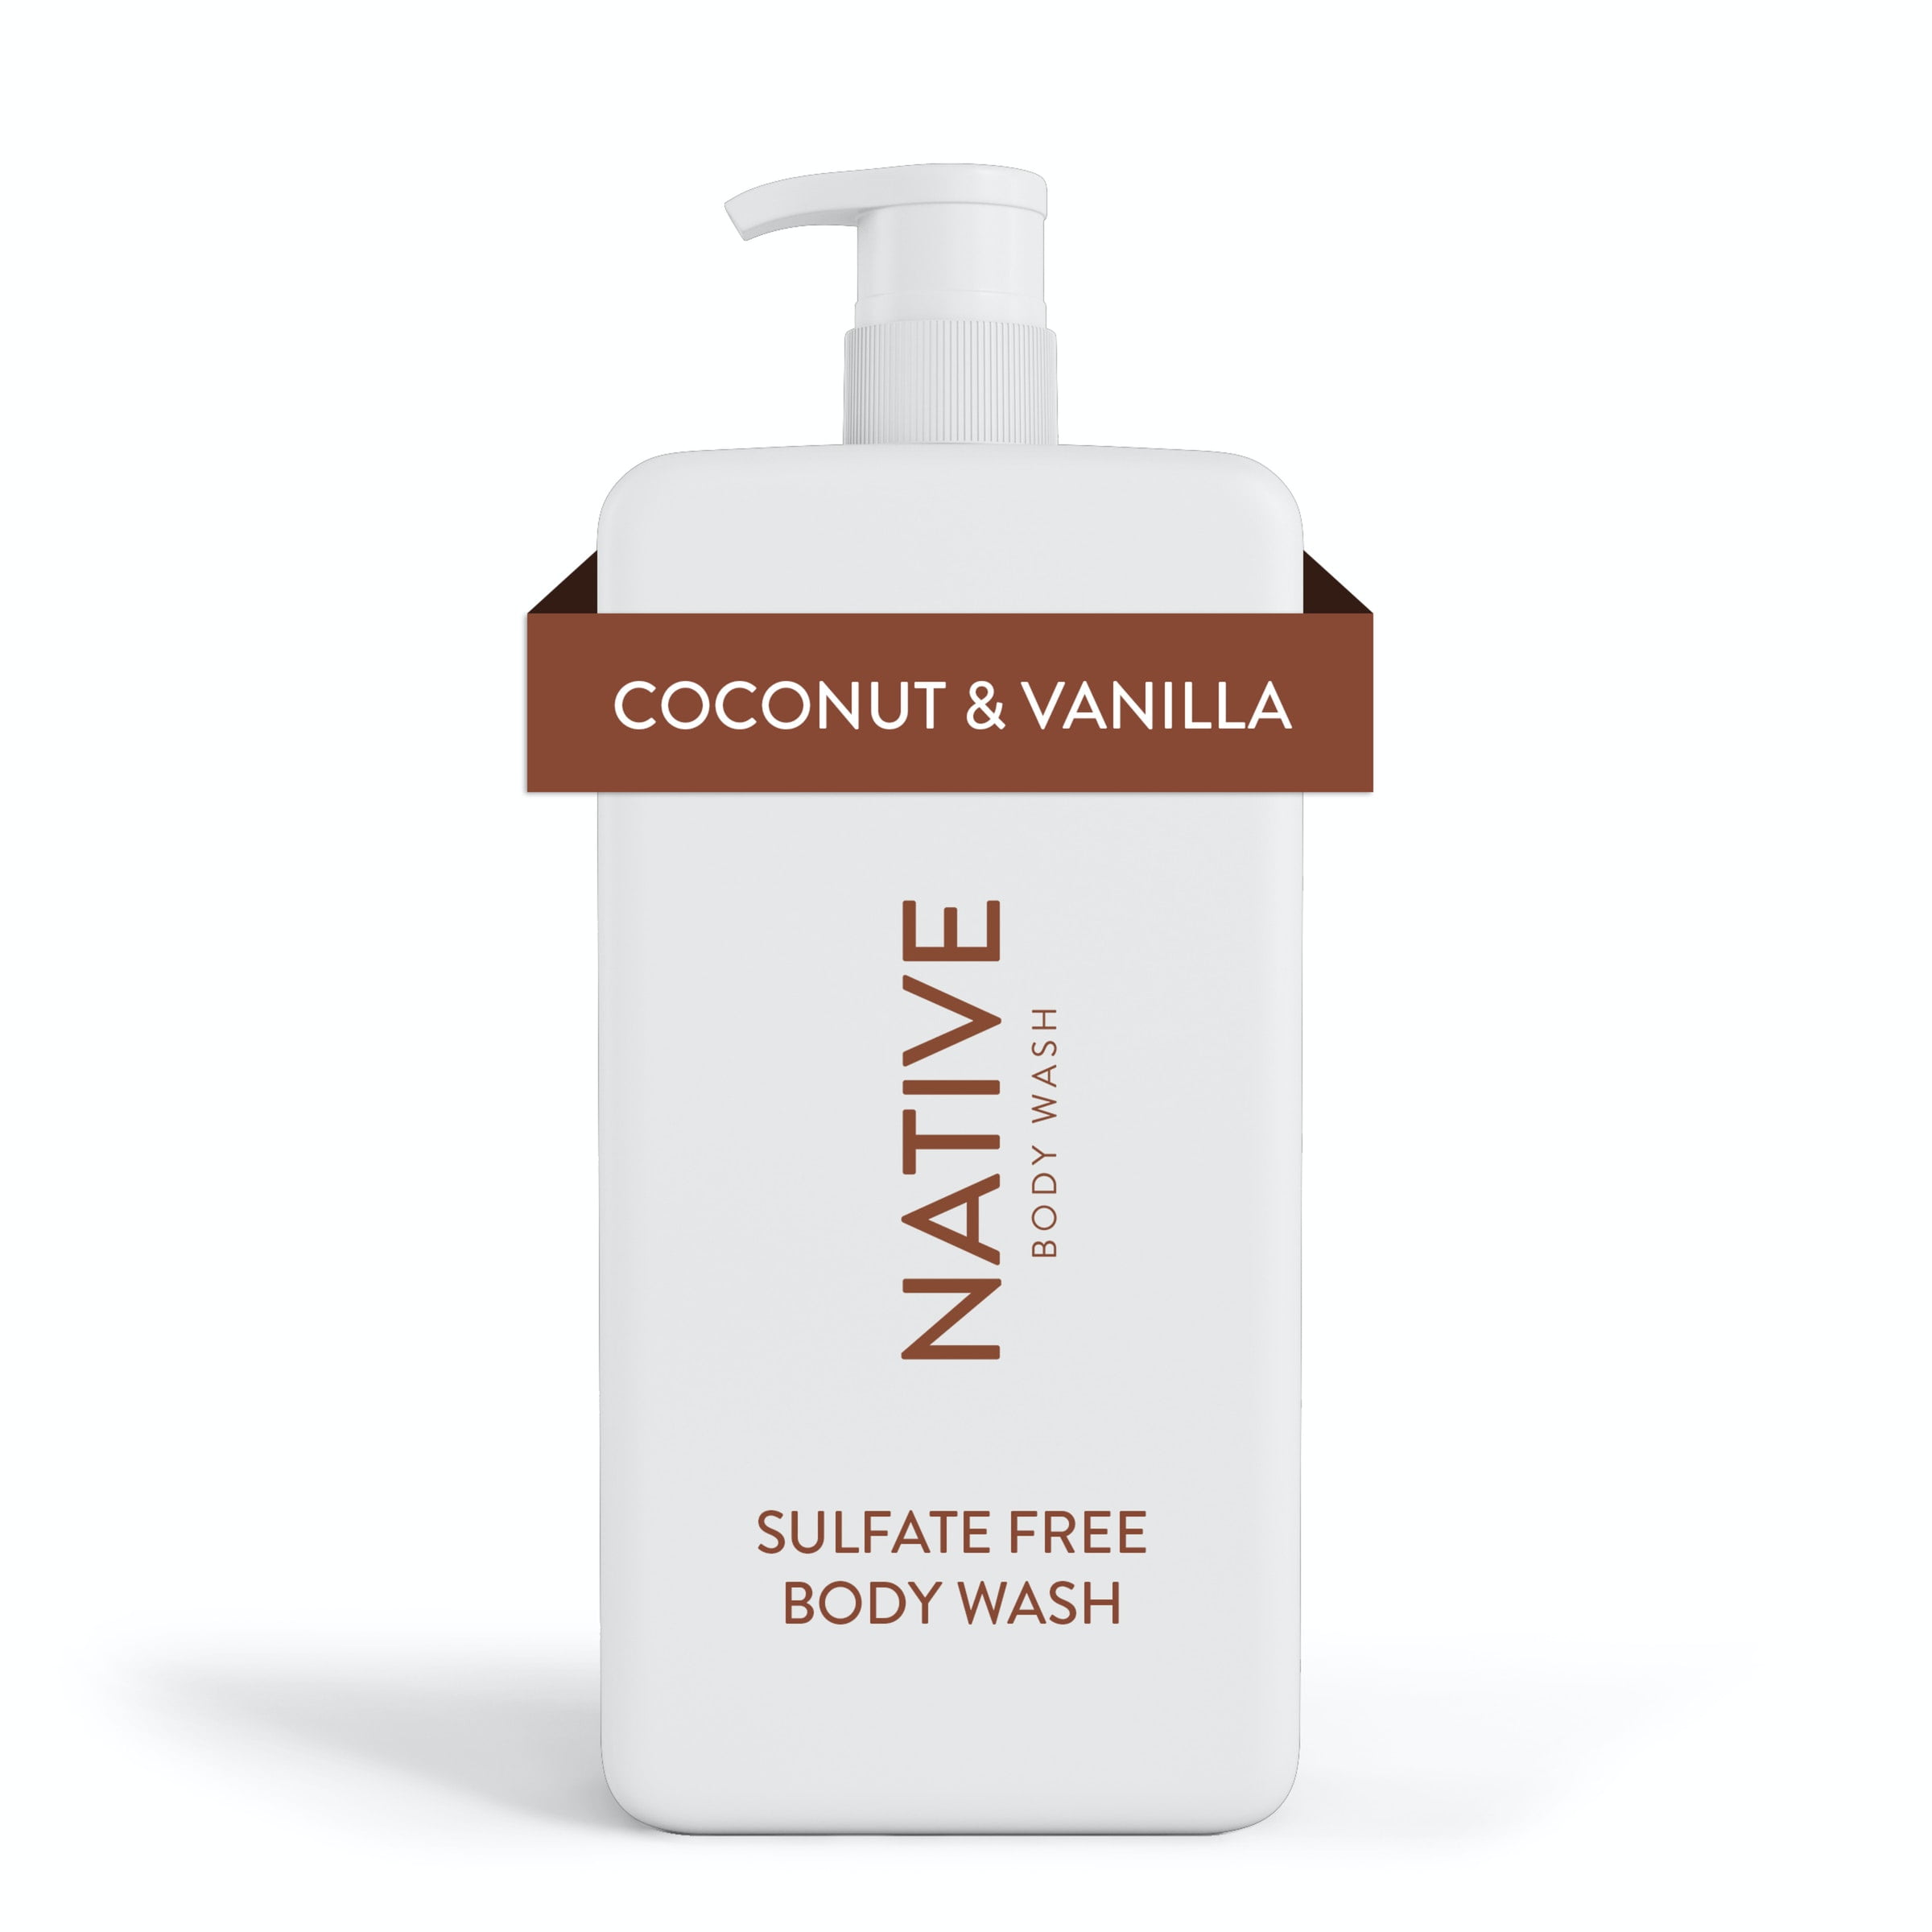 Native Natural Body Wash Pump, Coconut & Vanilla, Sulfate Free, Paraben Free, 36 oz